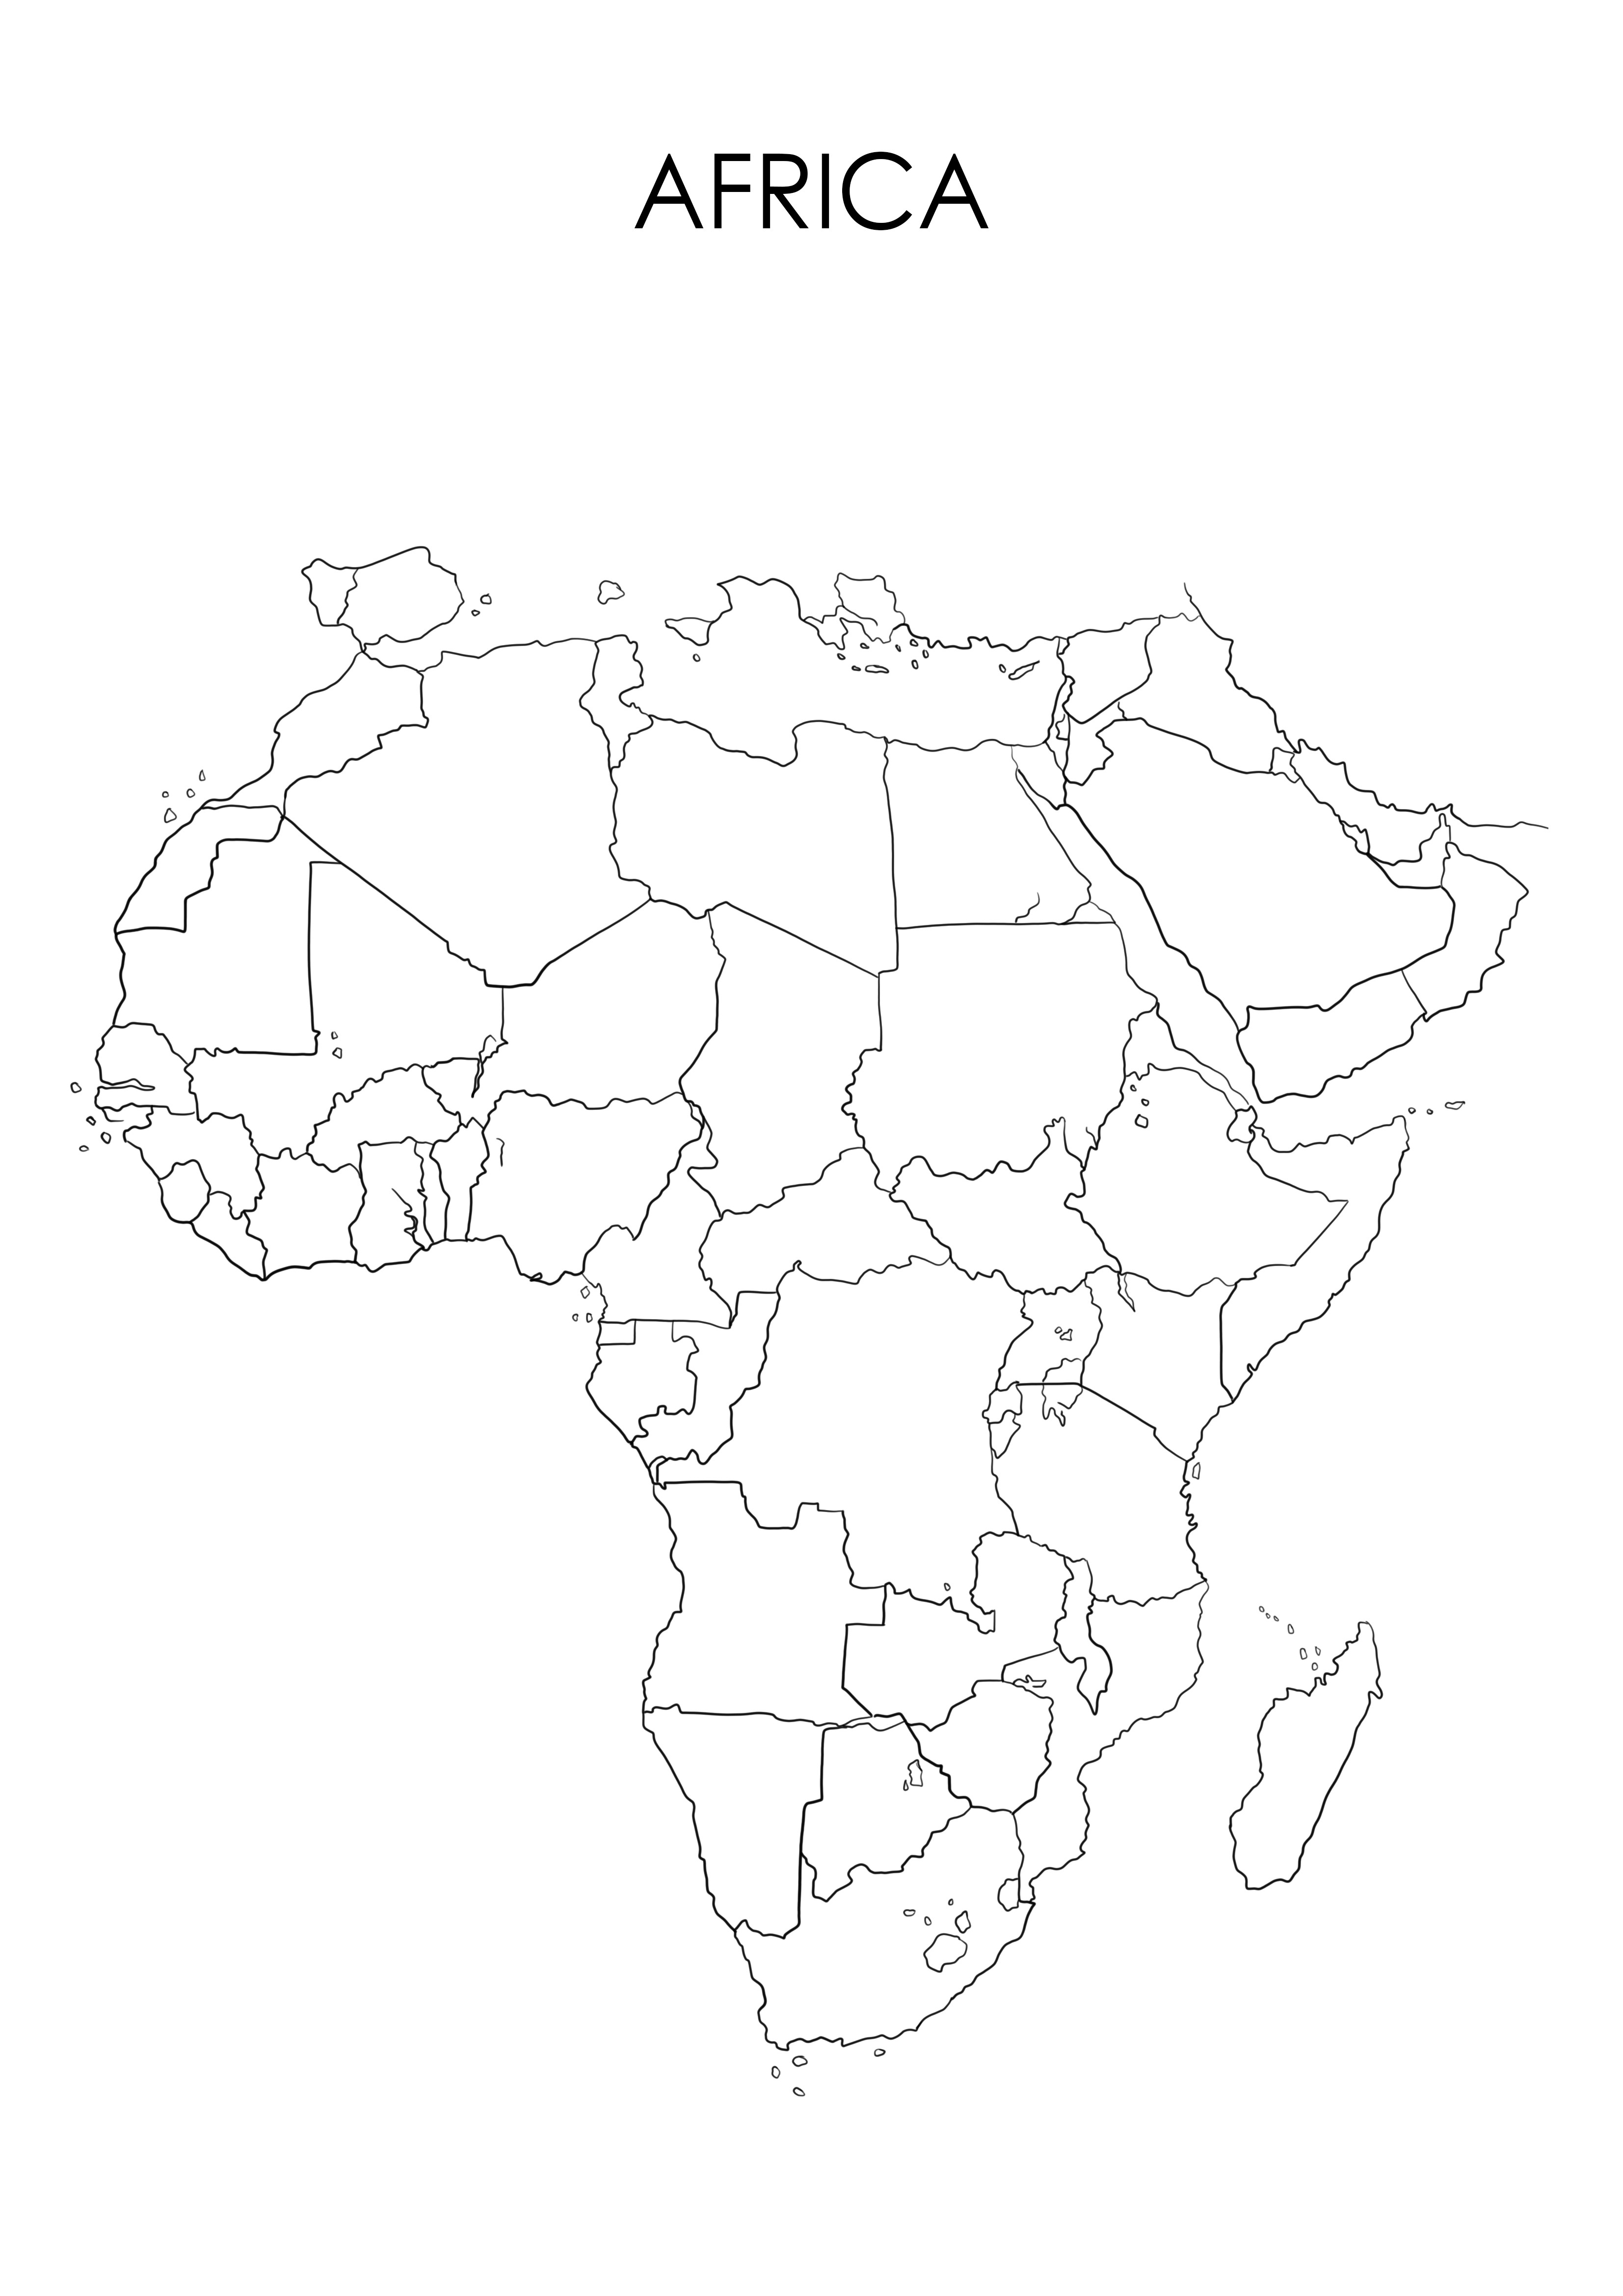 Mapa de África imprimible gratis para colorear fácilmente